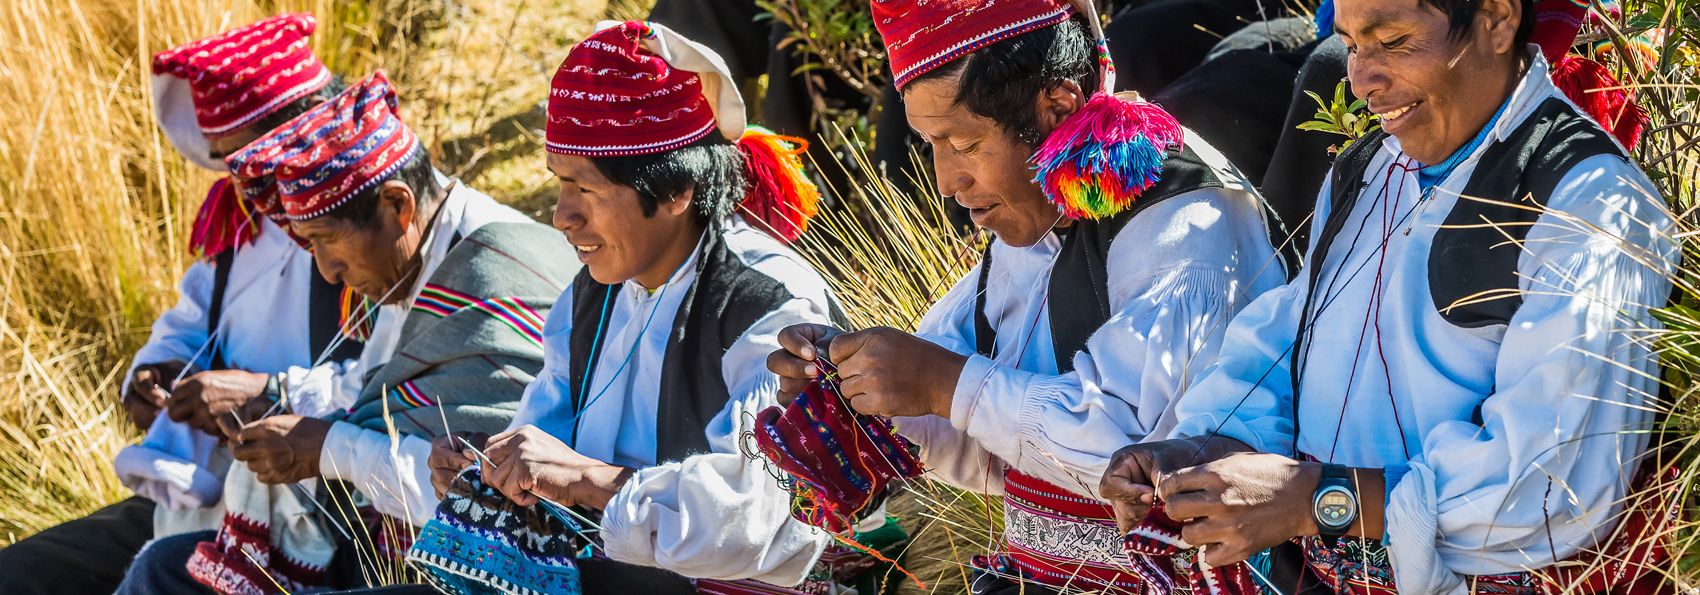 peru - titicaca soeen_taquile_befolkning_mand_strikke_01